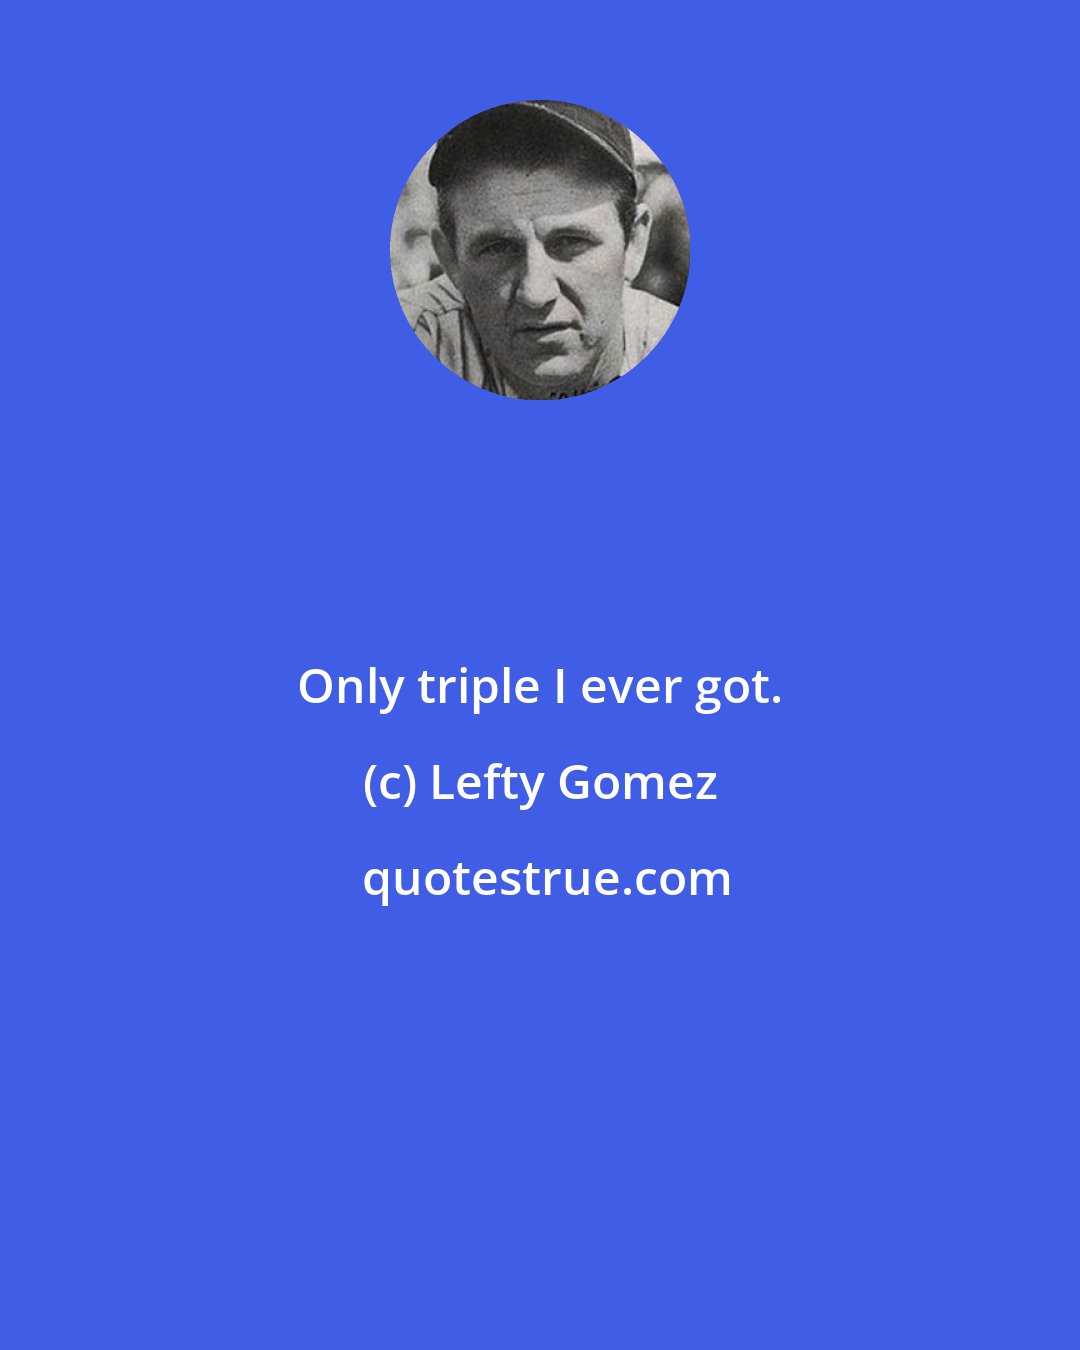 Lefty Gomez: Only triple I ever got.